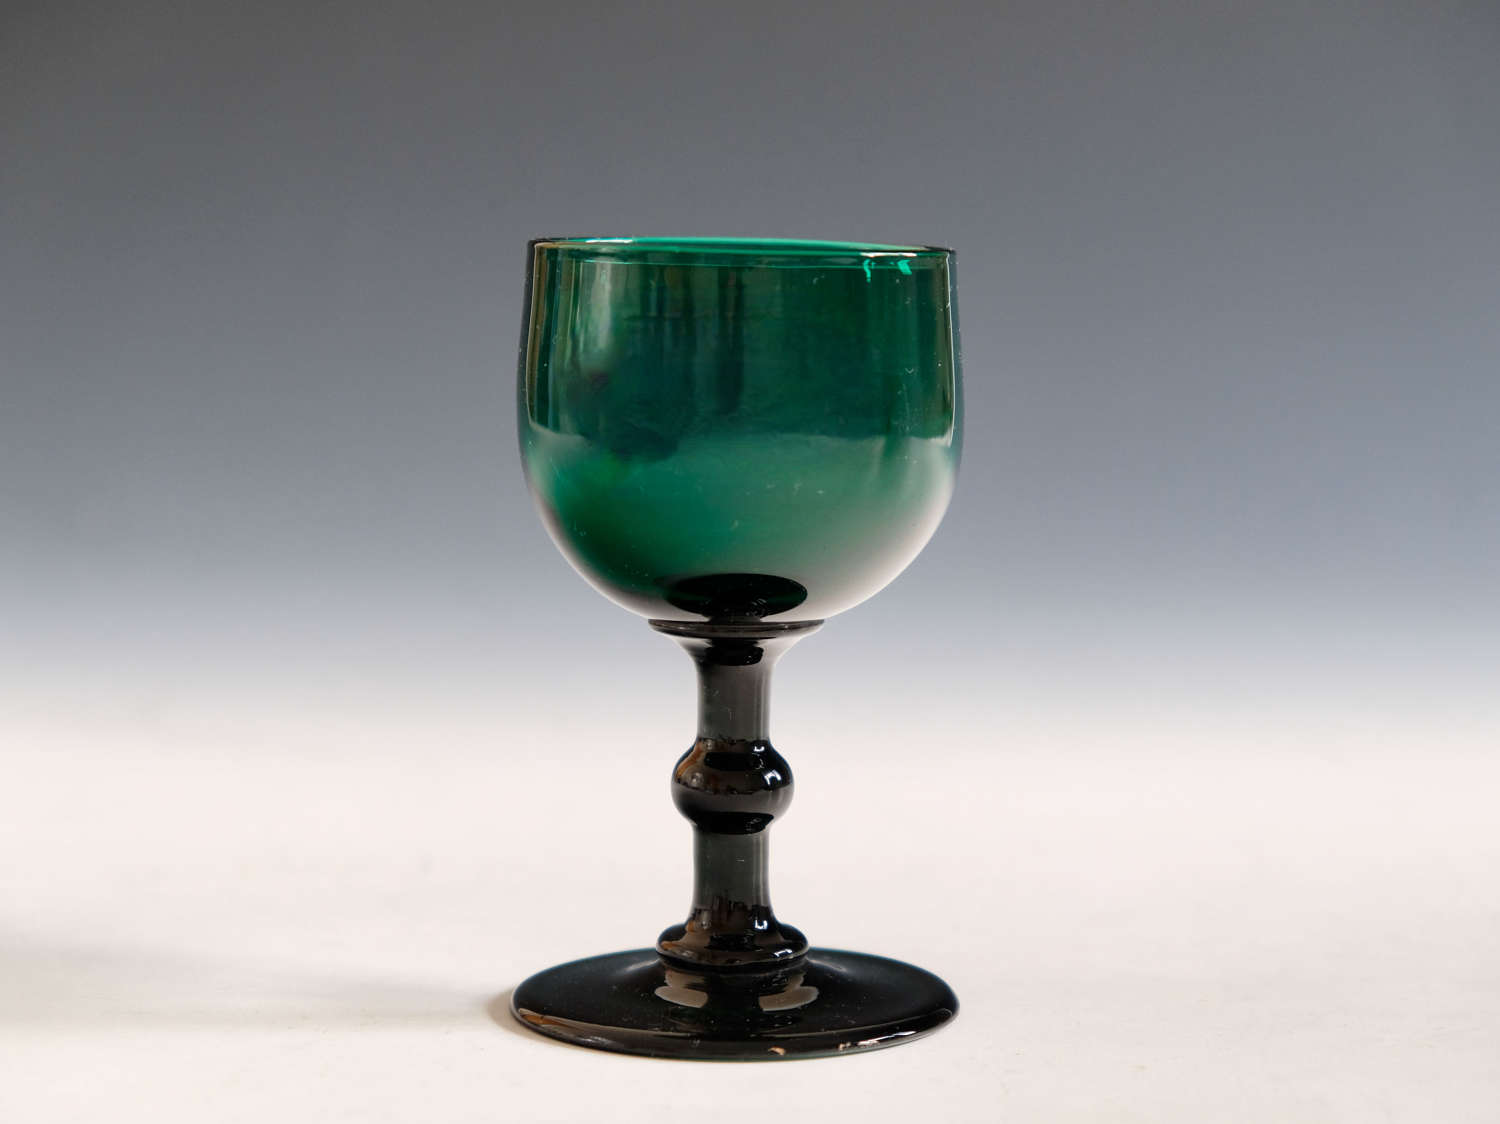 Antique glass - green wine glass English c1820